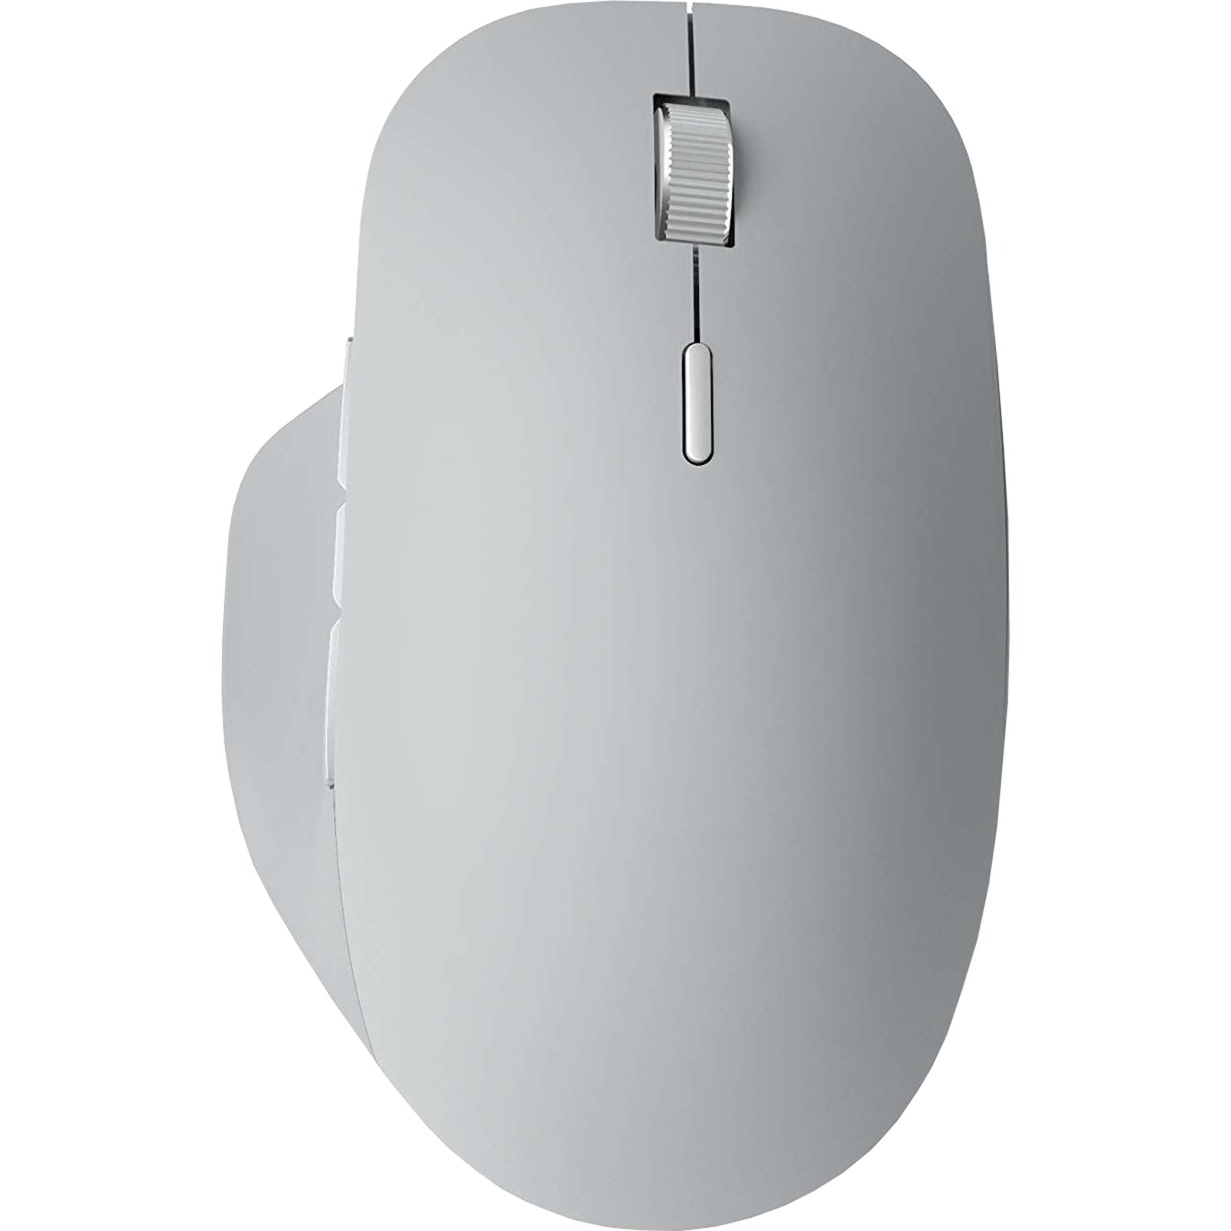 Image of Alternate - Precision Mouse, Maus online einkaufen bei Alternate